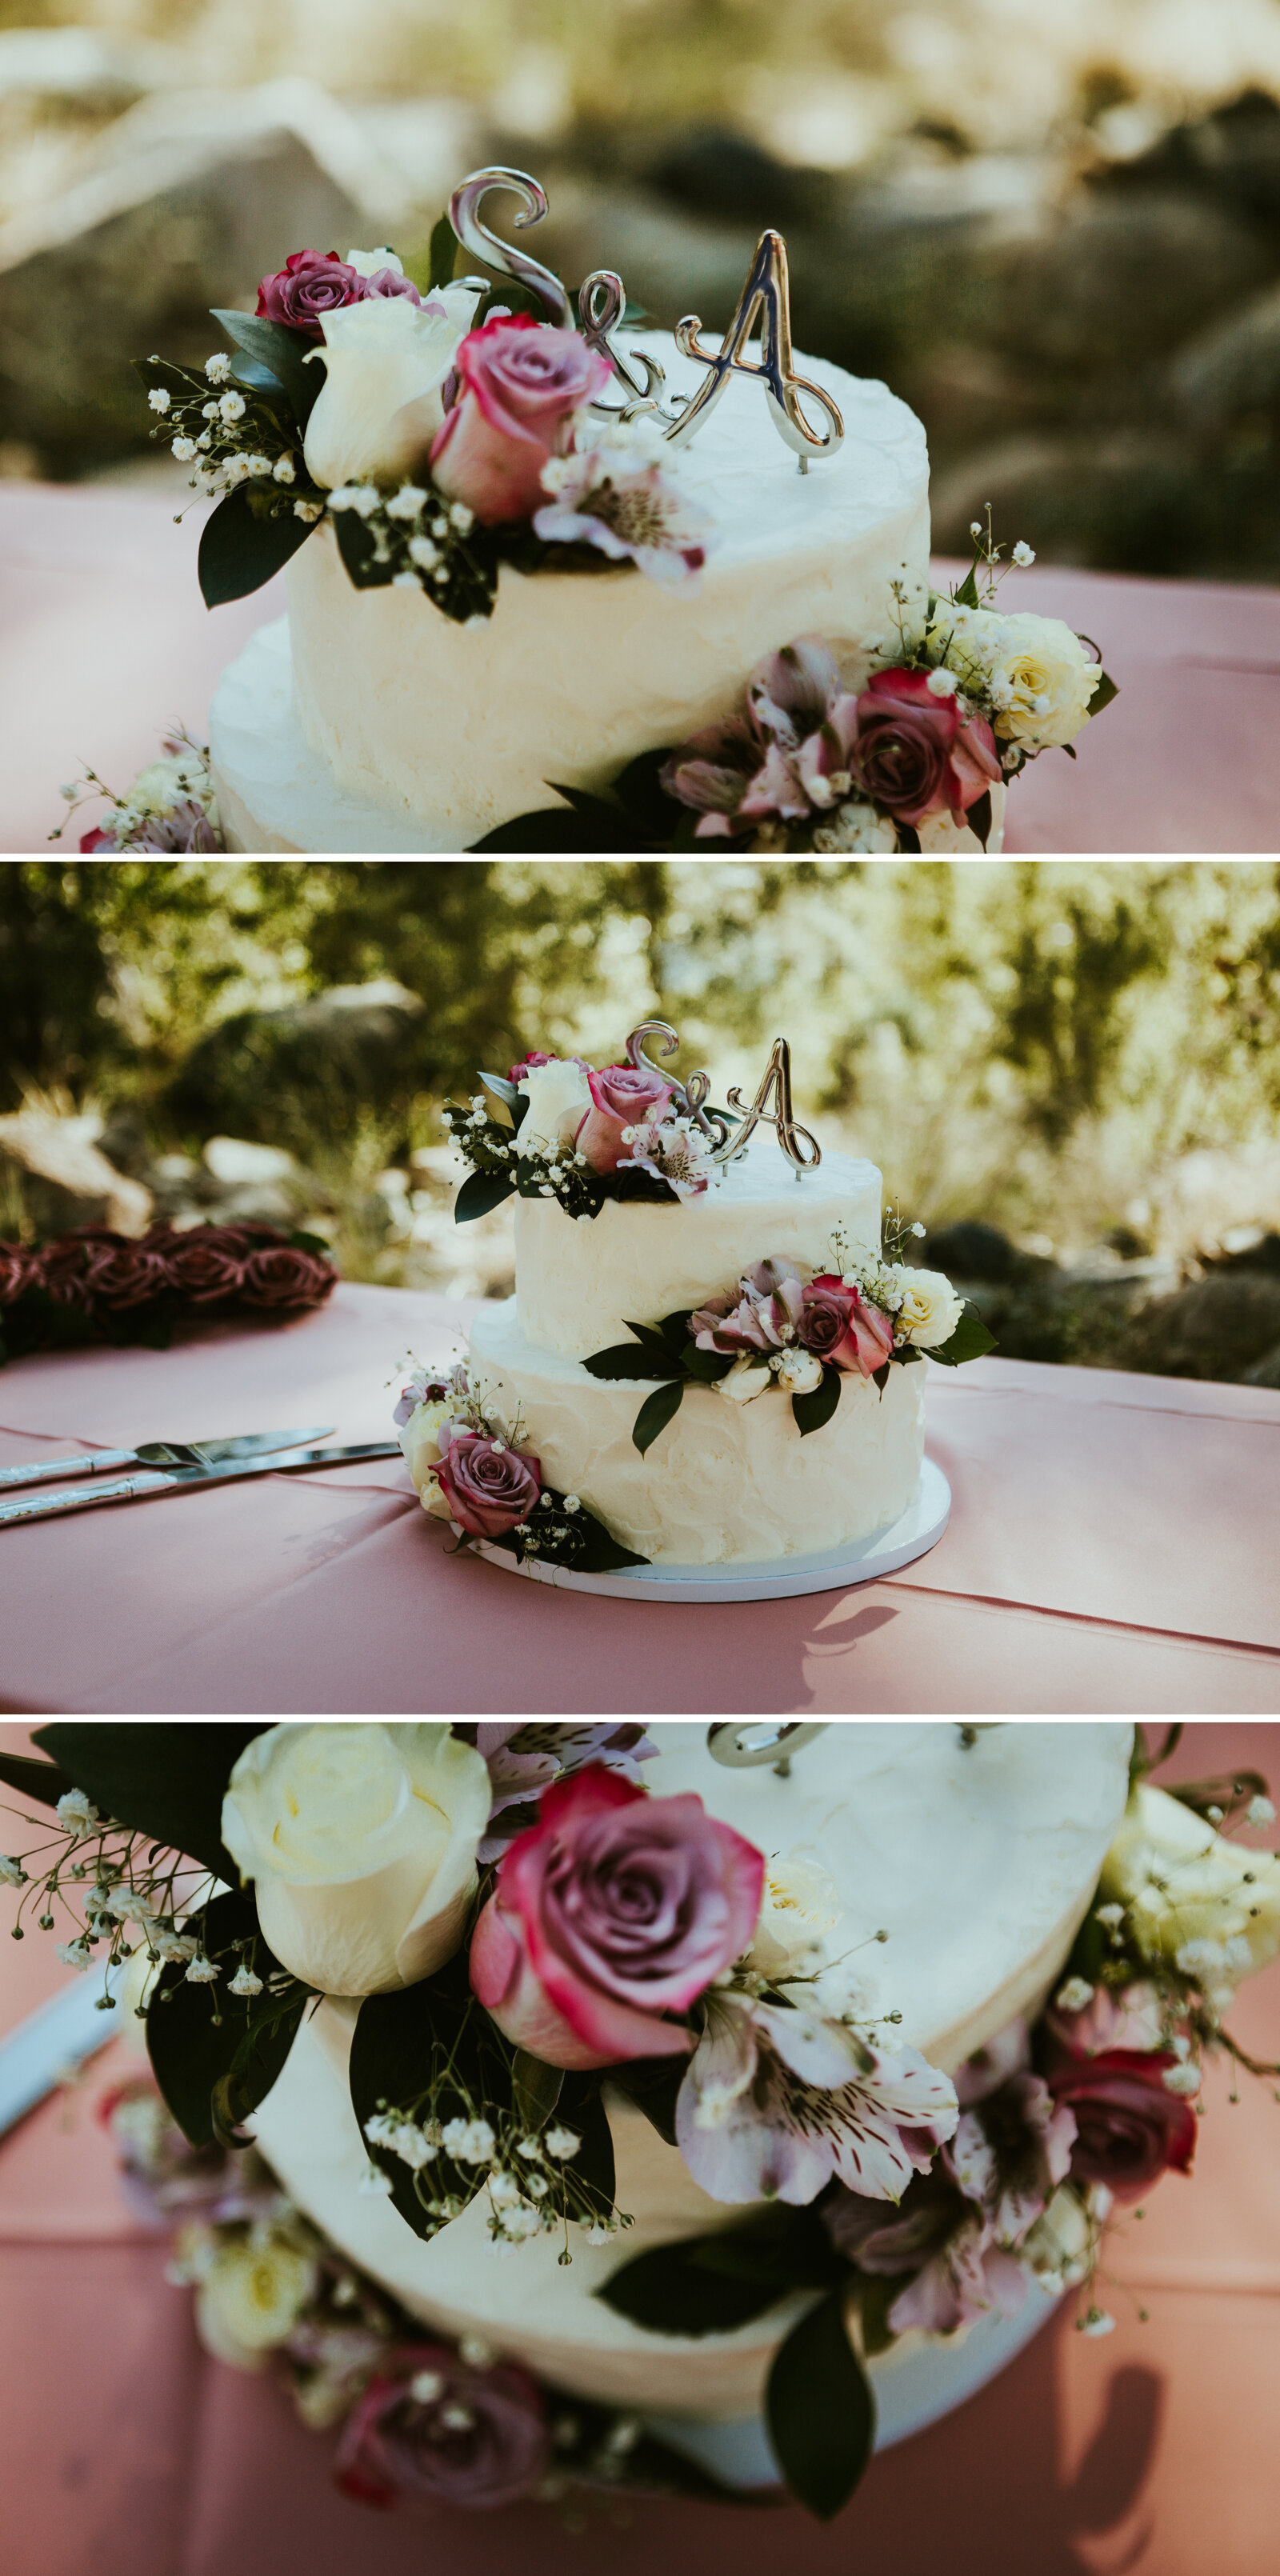 goldwater lake prescott arizona wedding cake floral cake frankely photography.jpg